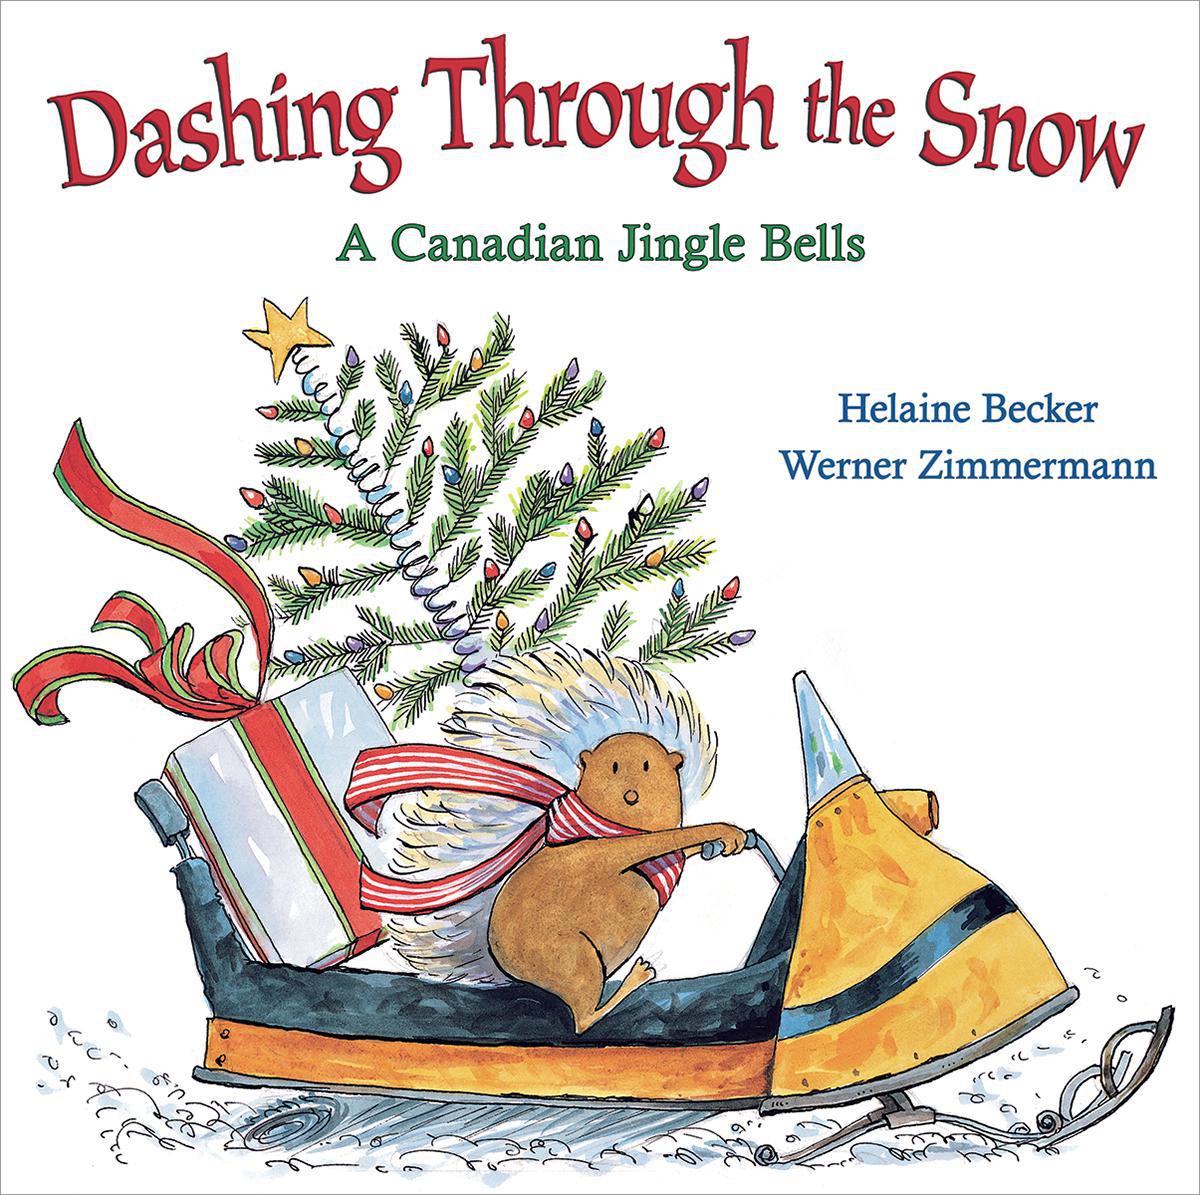  Dashing Through the Snow: A Canadian Jingle Bells